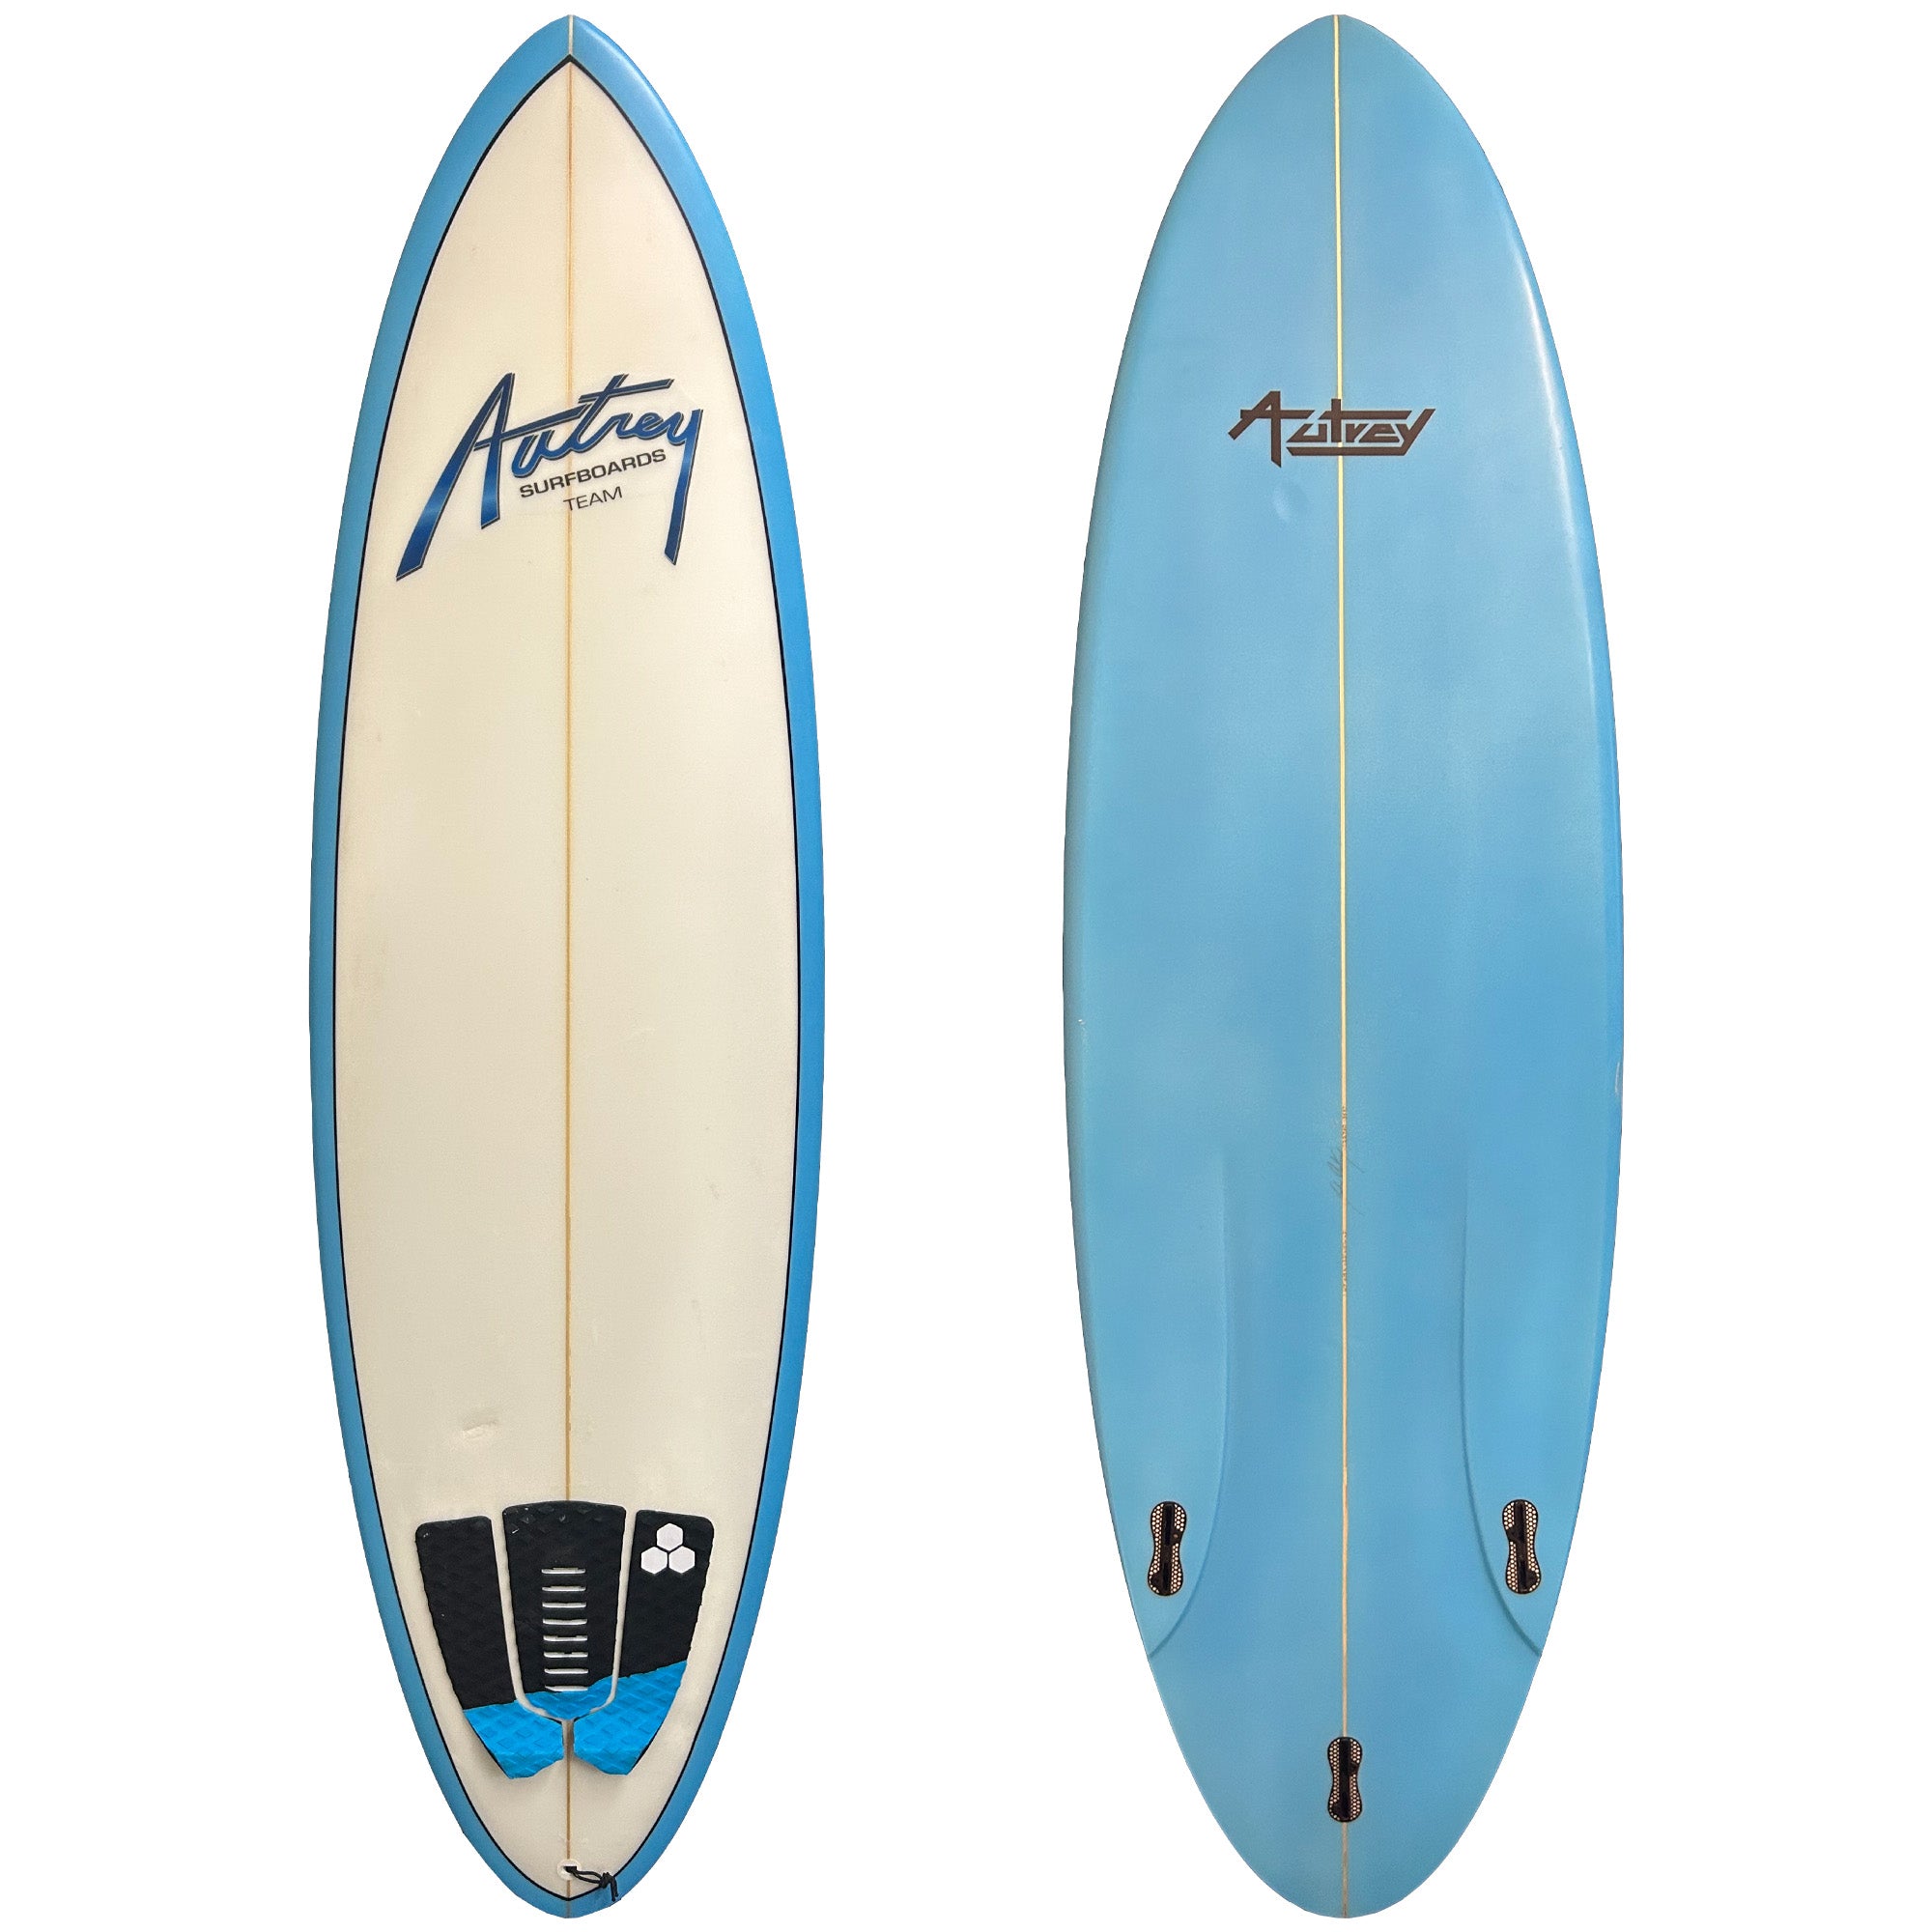 Autrey Surfboards 6'7 Consignment Surfboard